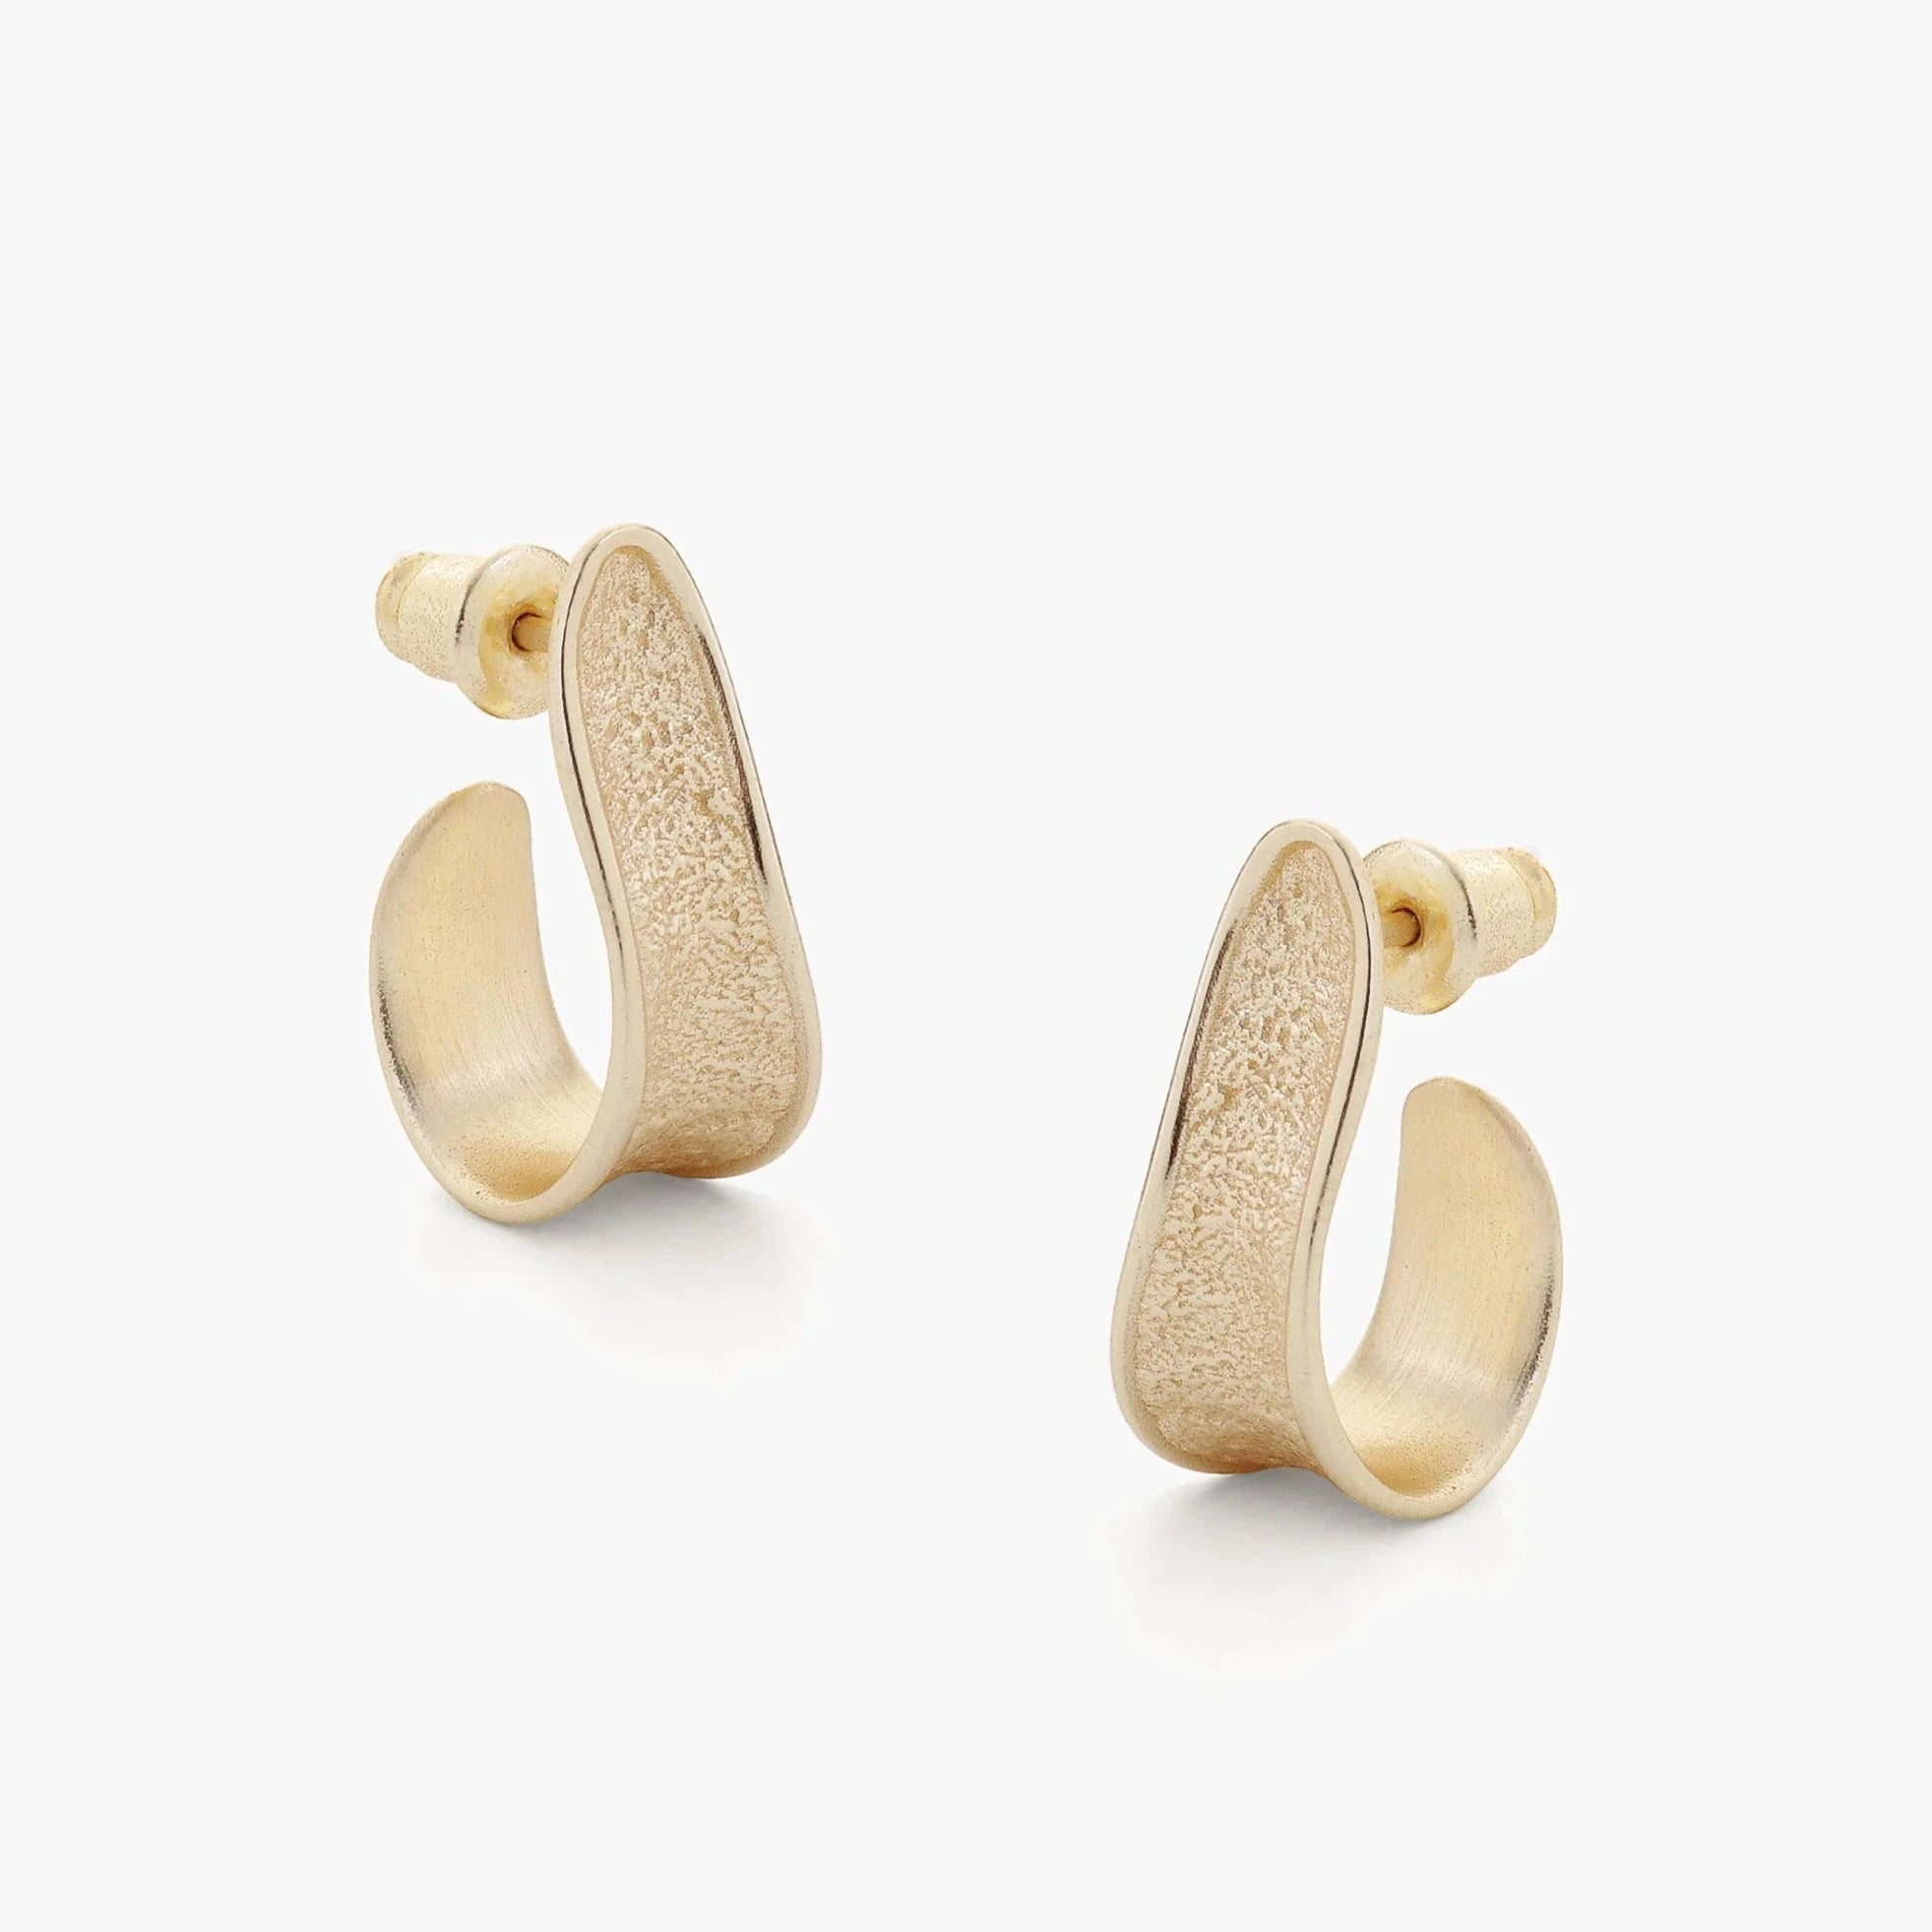 Bask Earrings Gold - The Nancy Smillie Shop - Art, Jewellery & Designer Gifts Glasgow